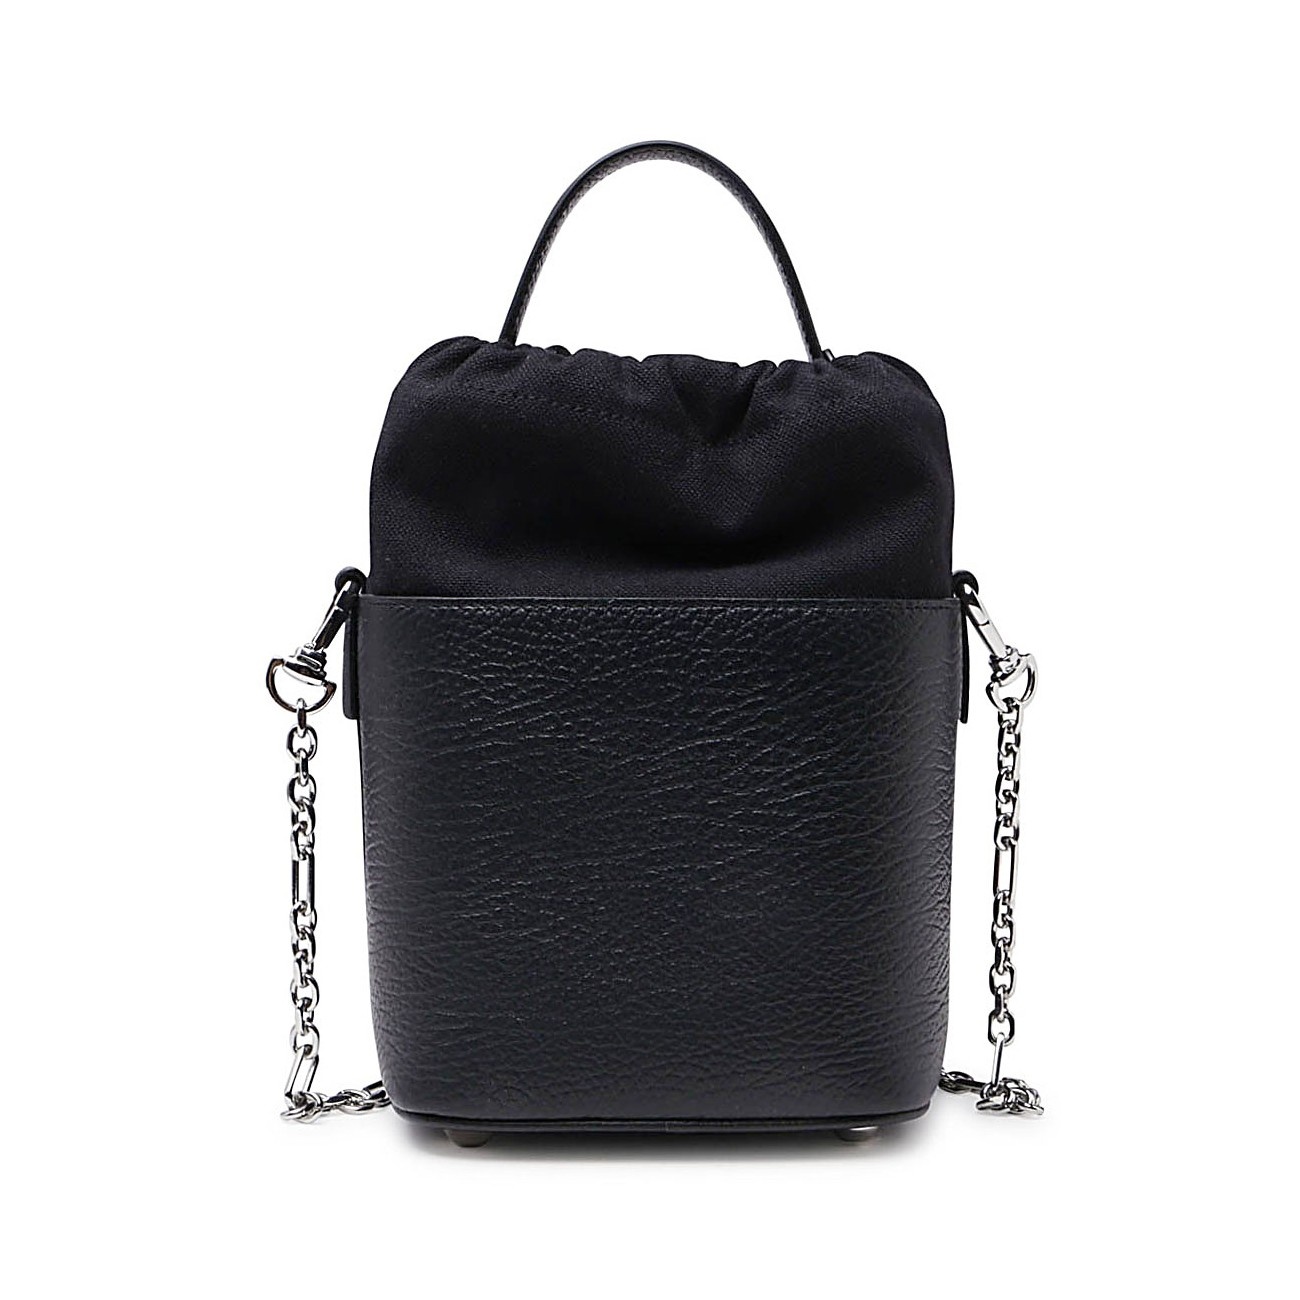 black leather 5ac bucket bag - 2